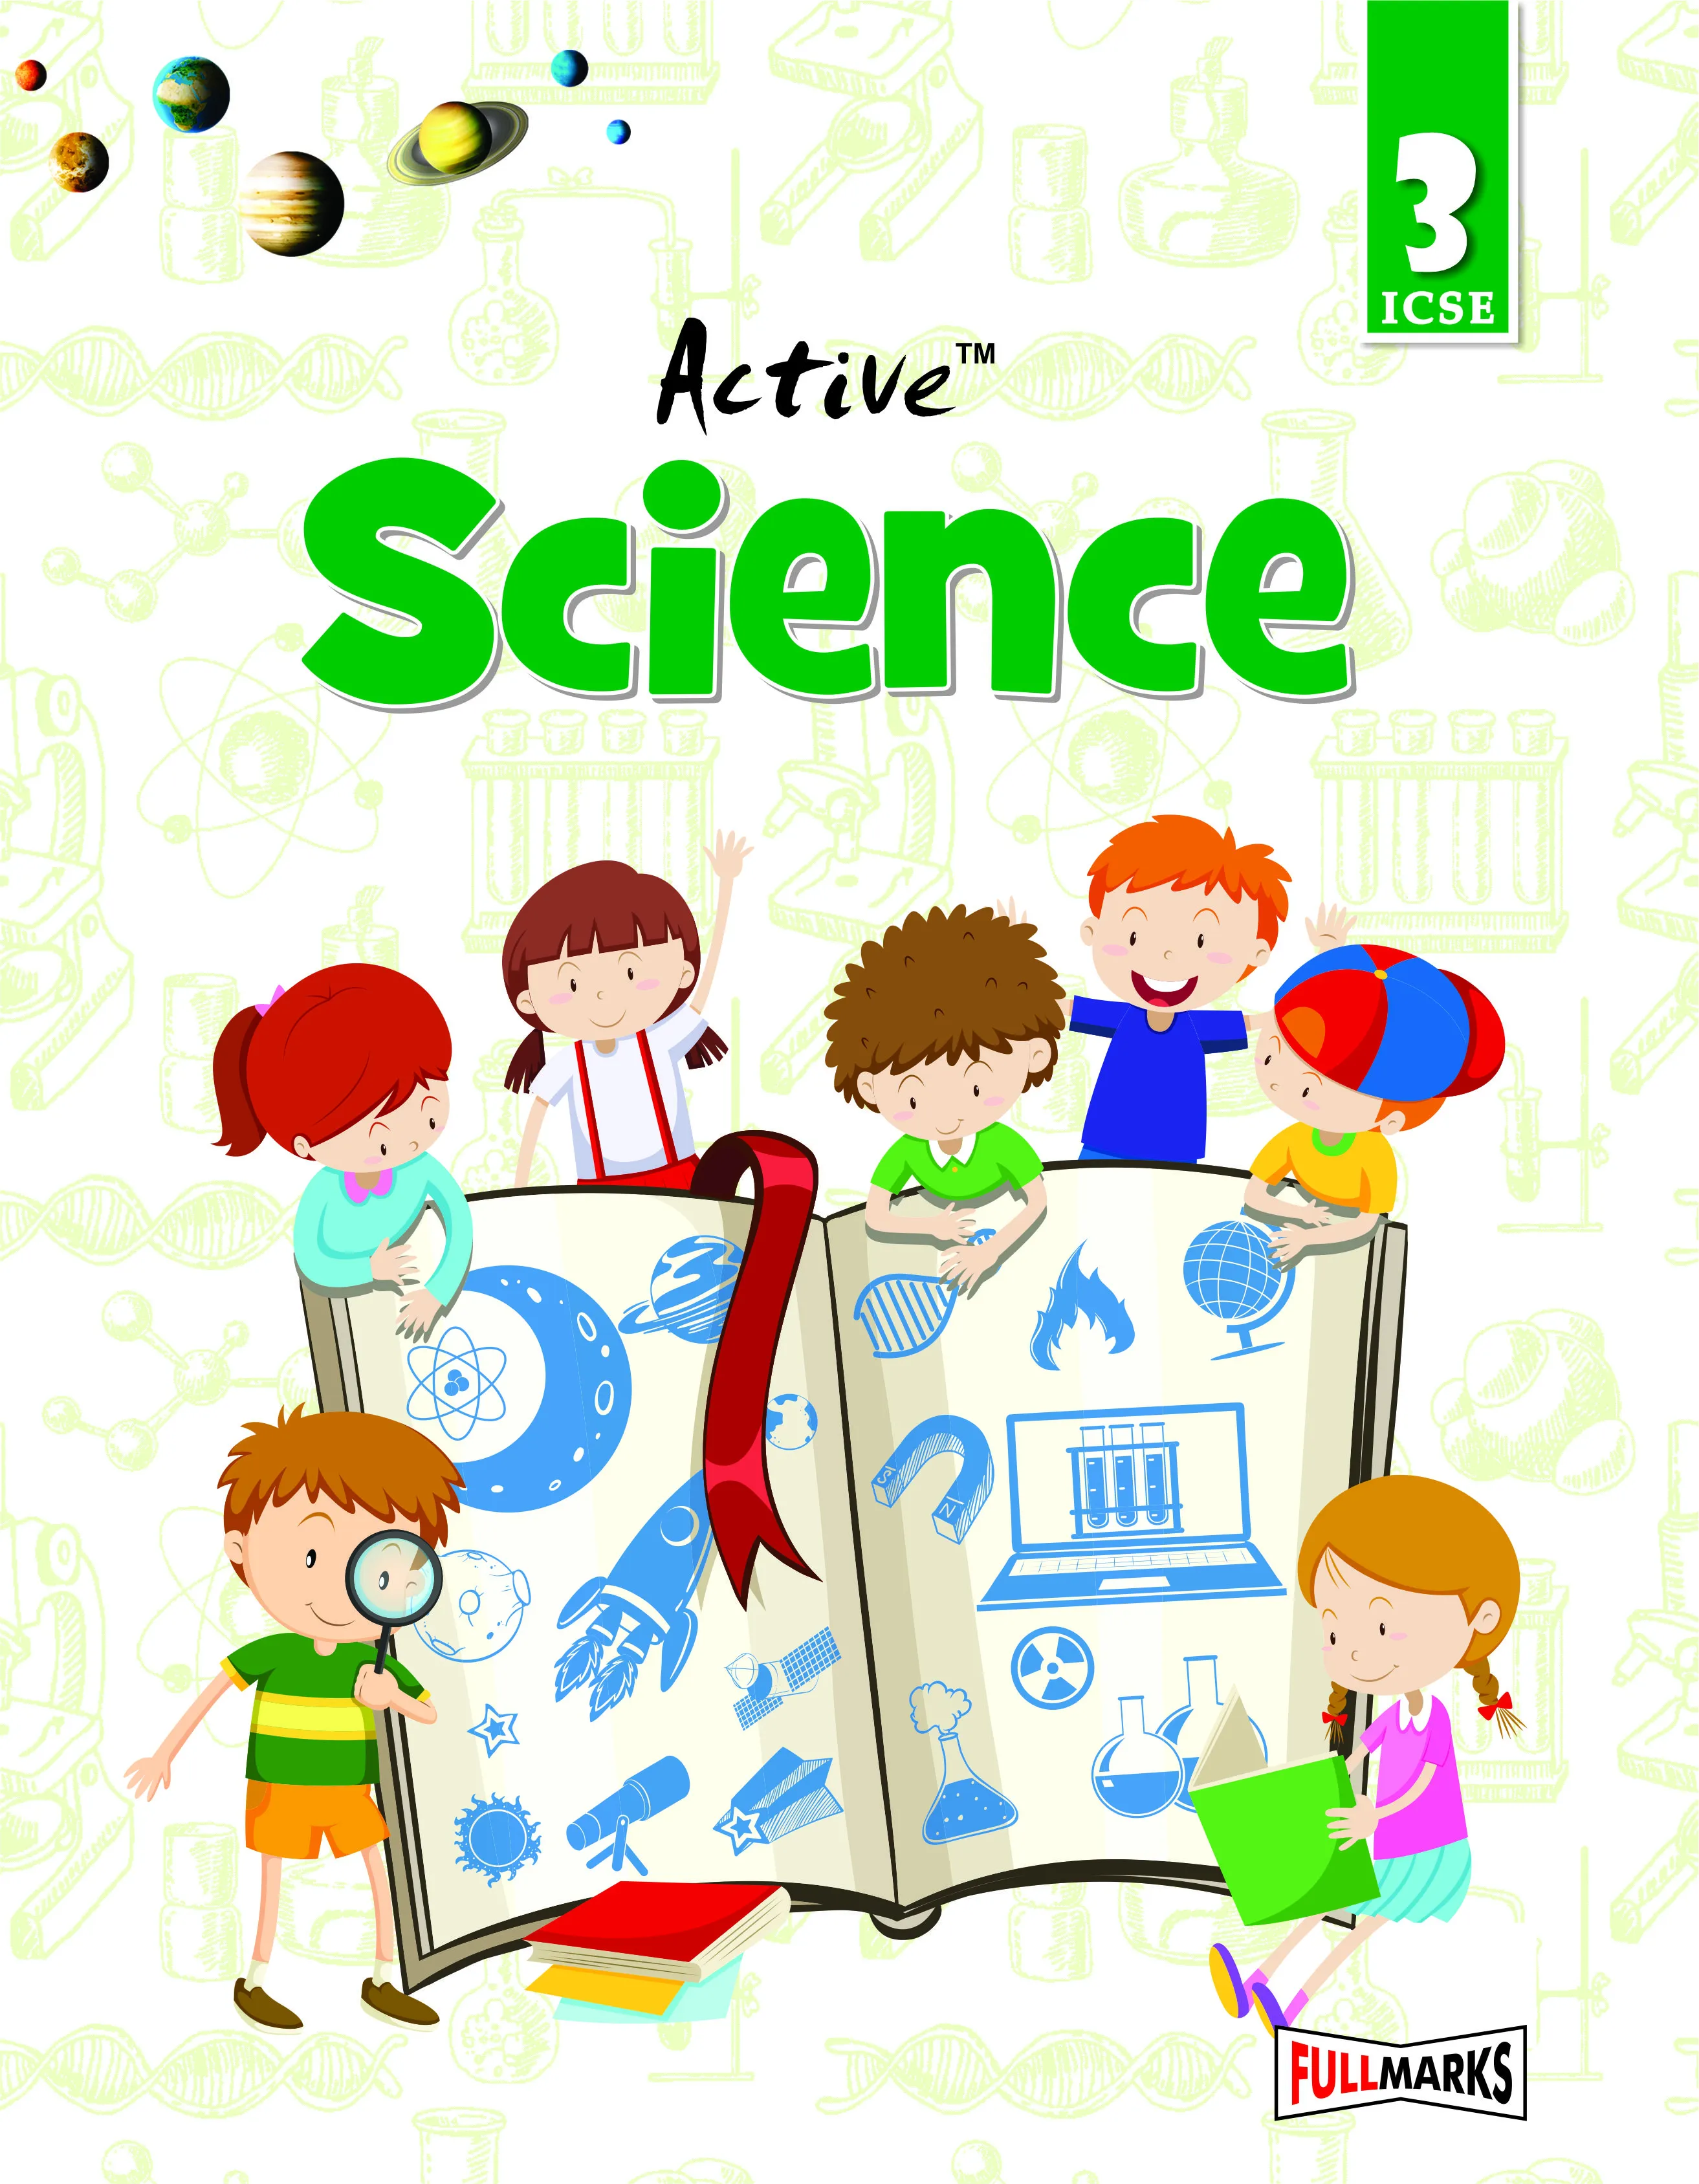 Active Science-3